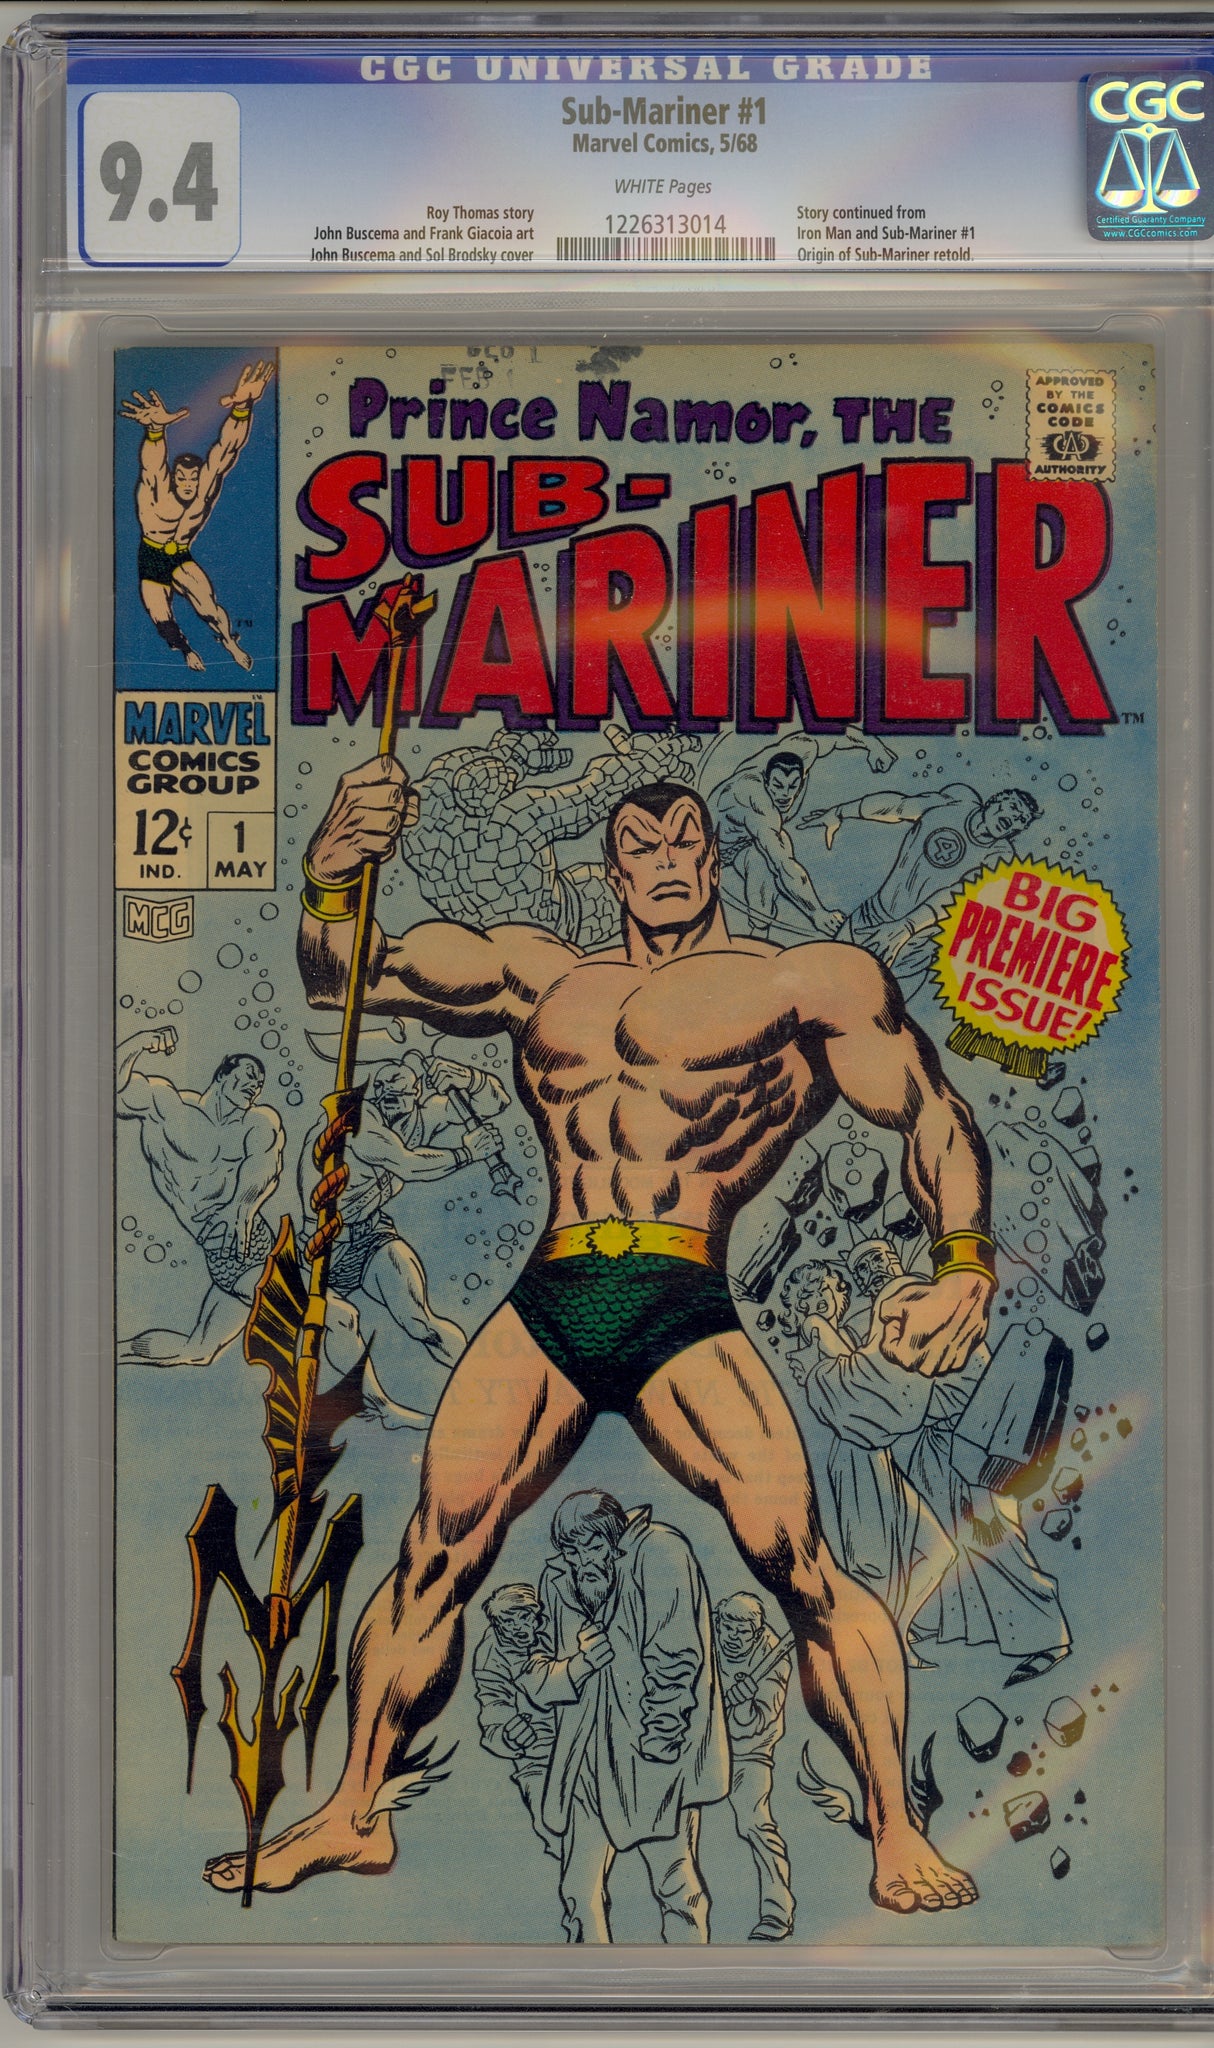 Sub-Mariner #1 (1968)